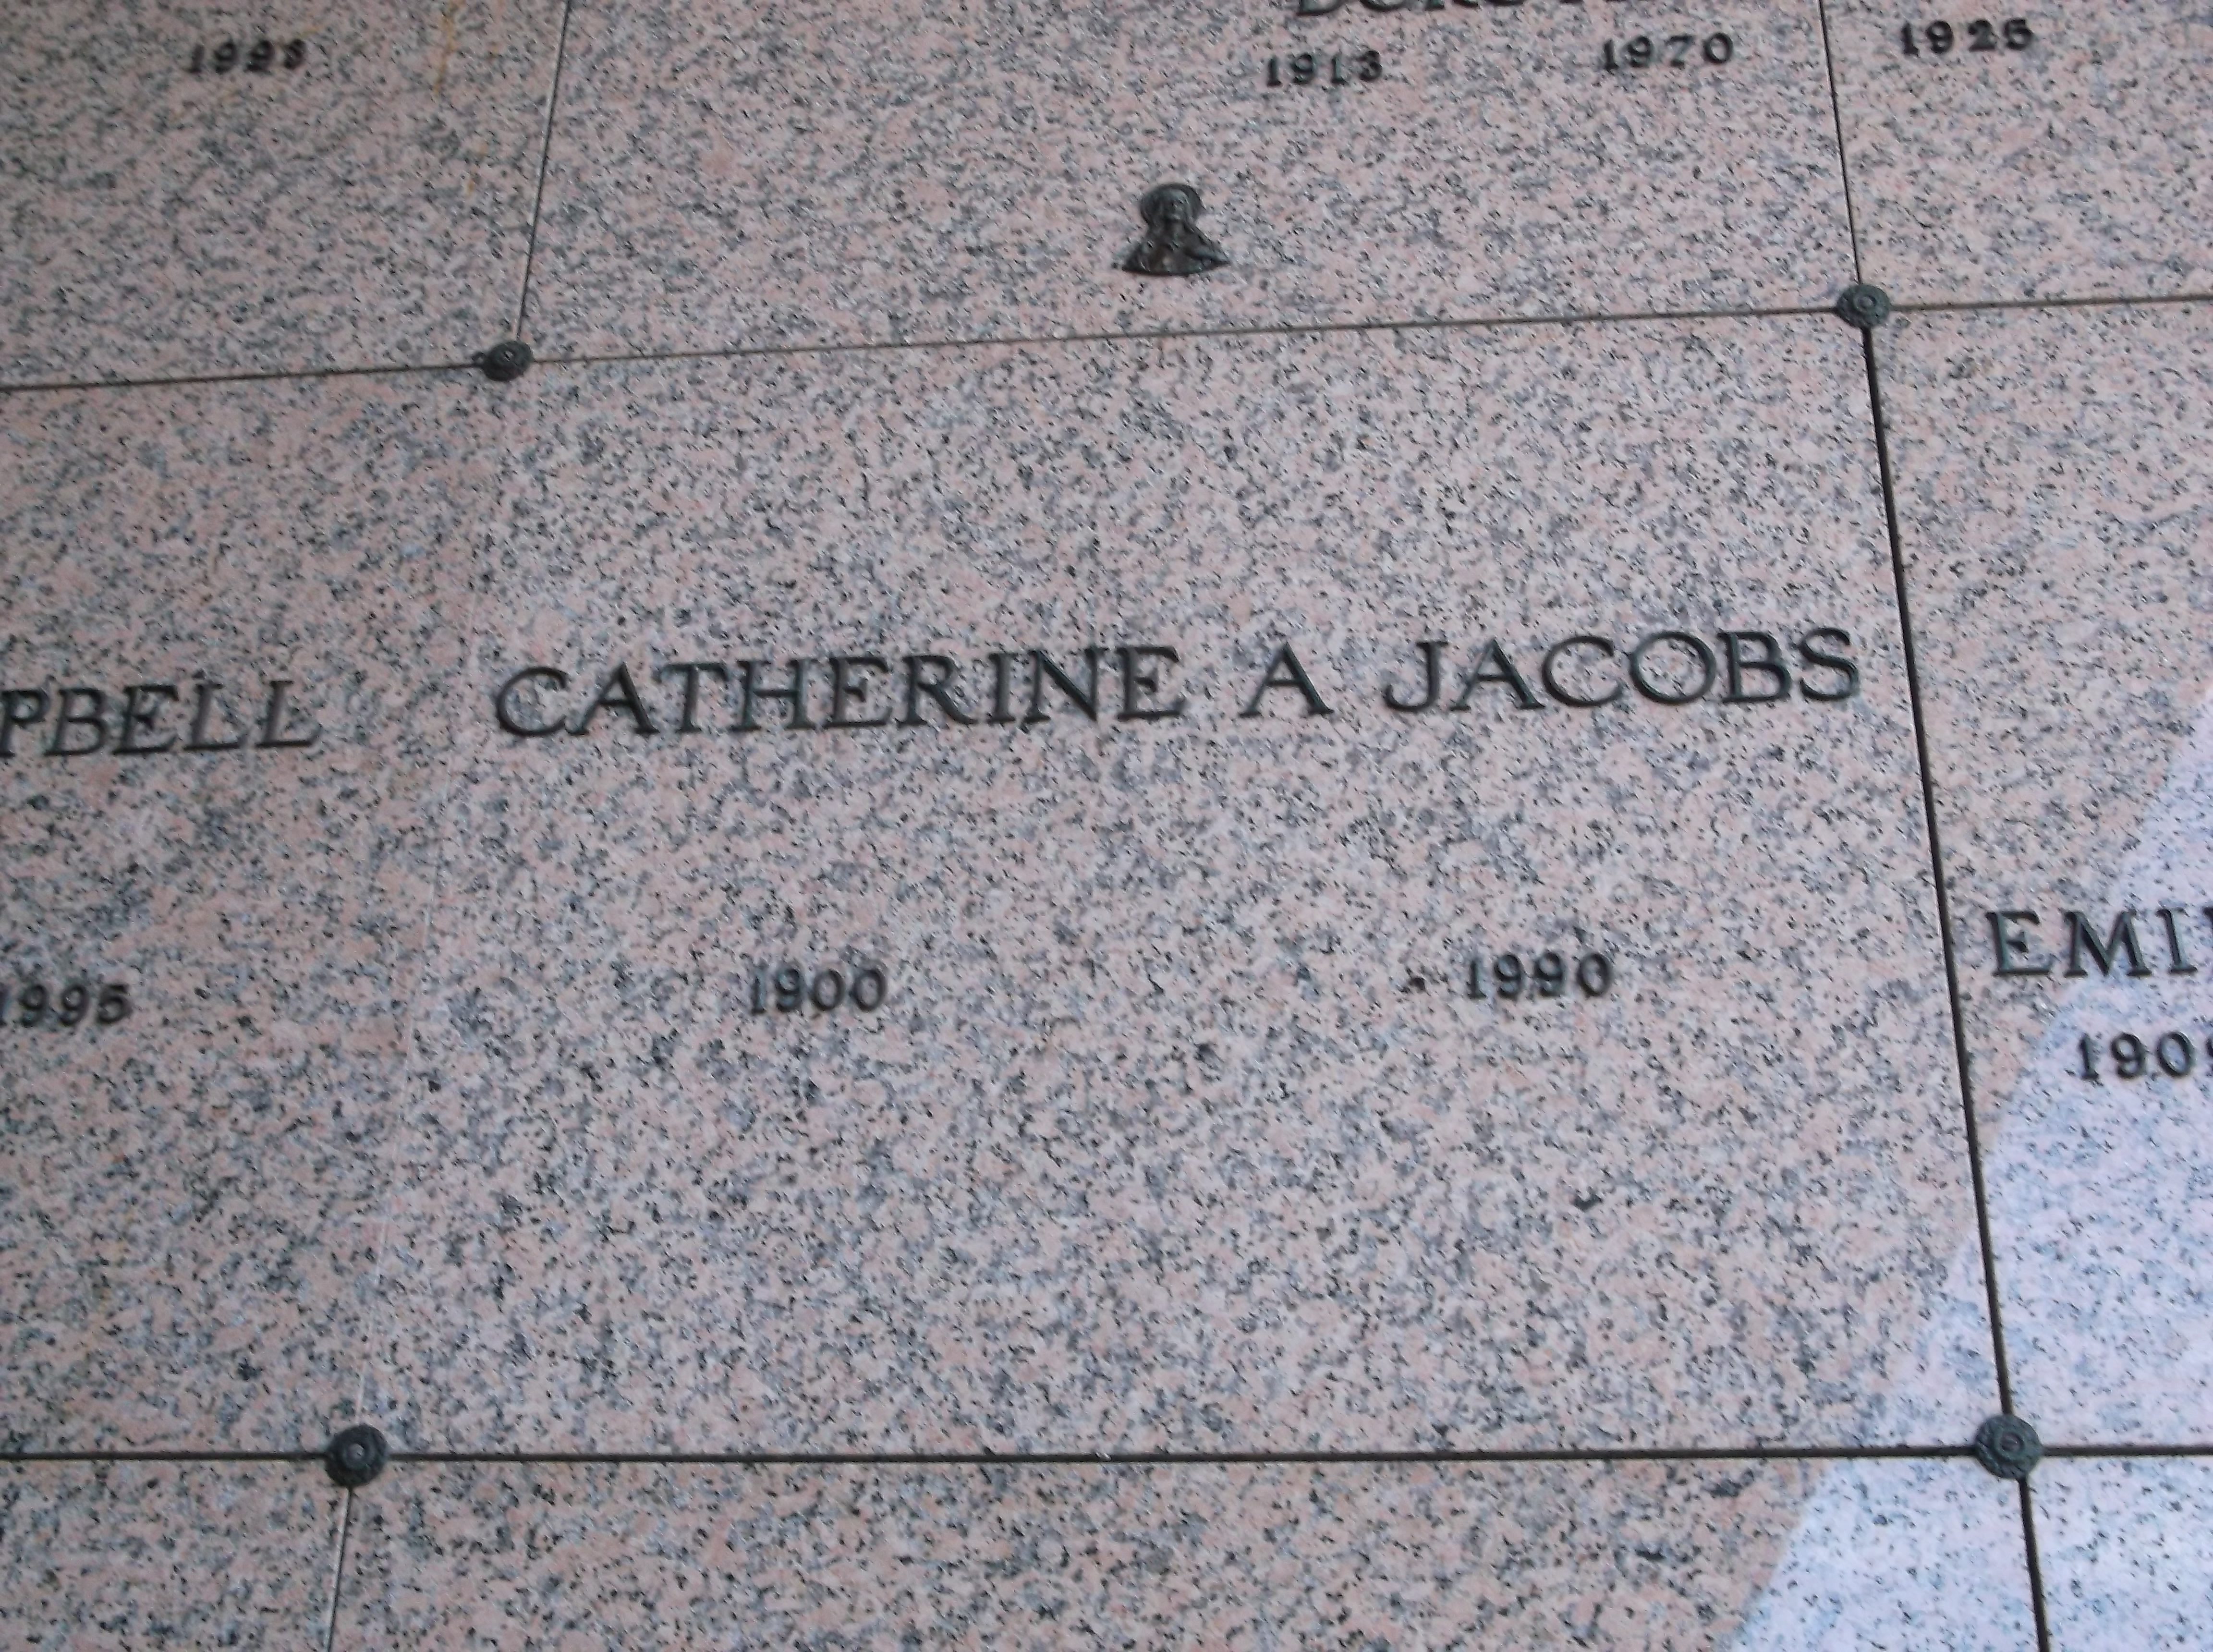 Catherine A Jaobs